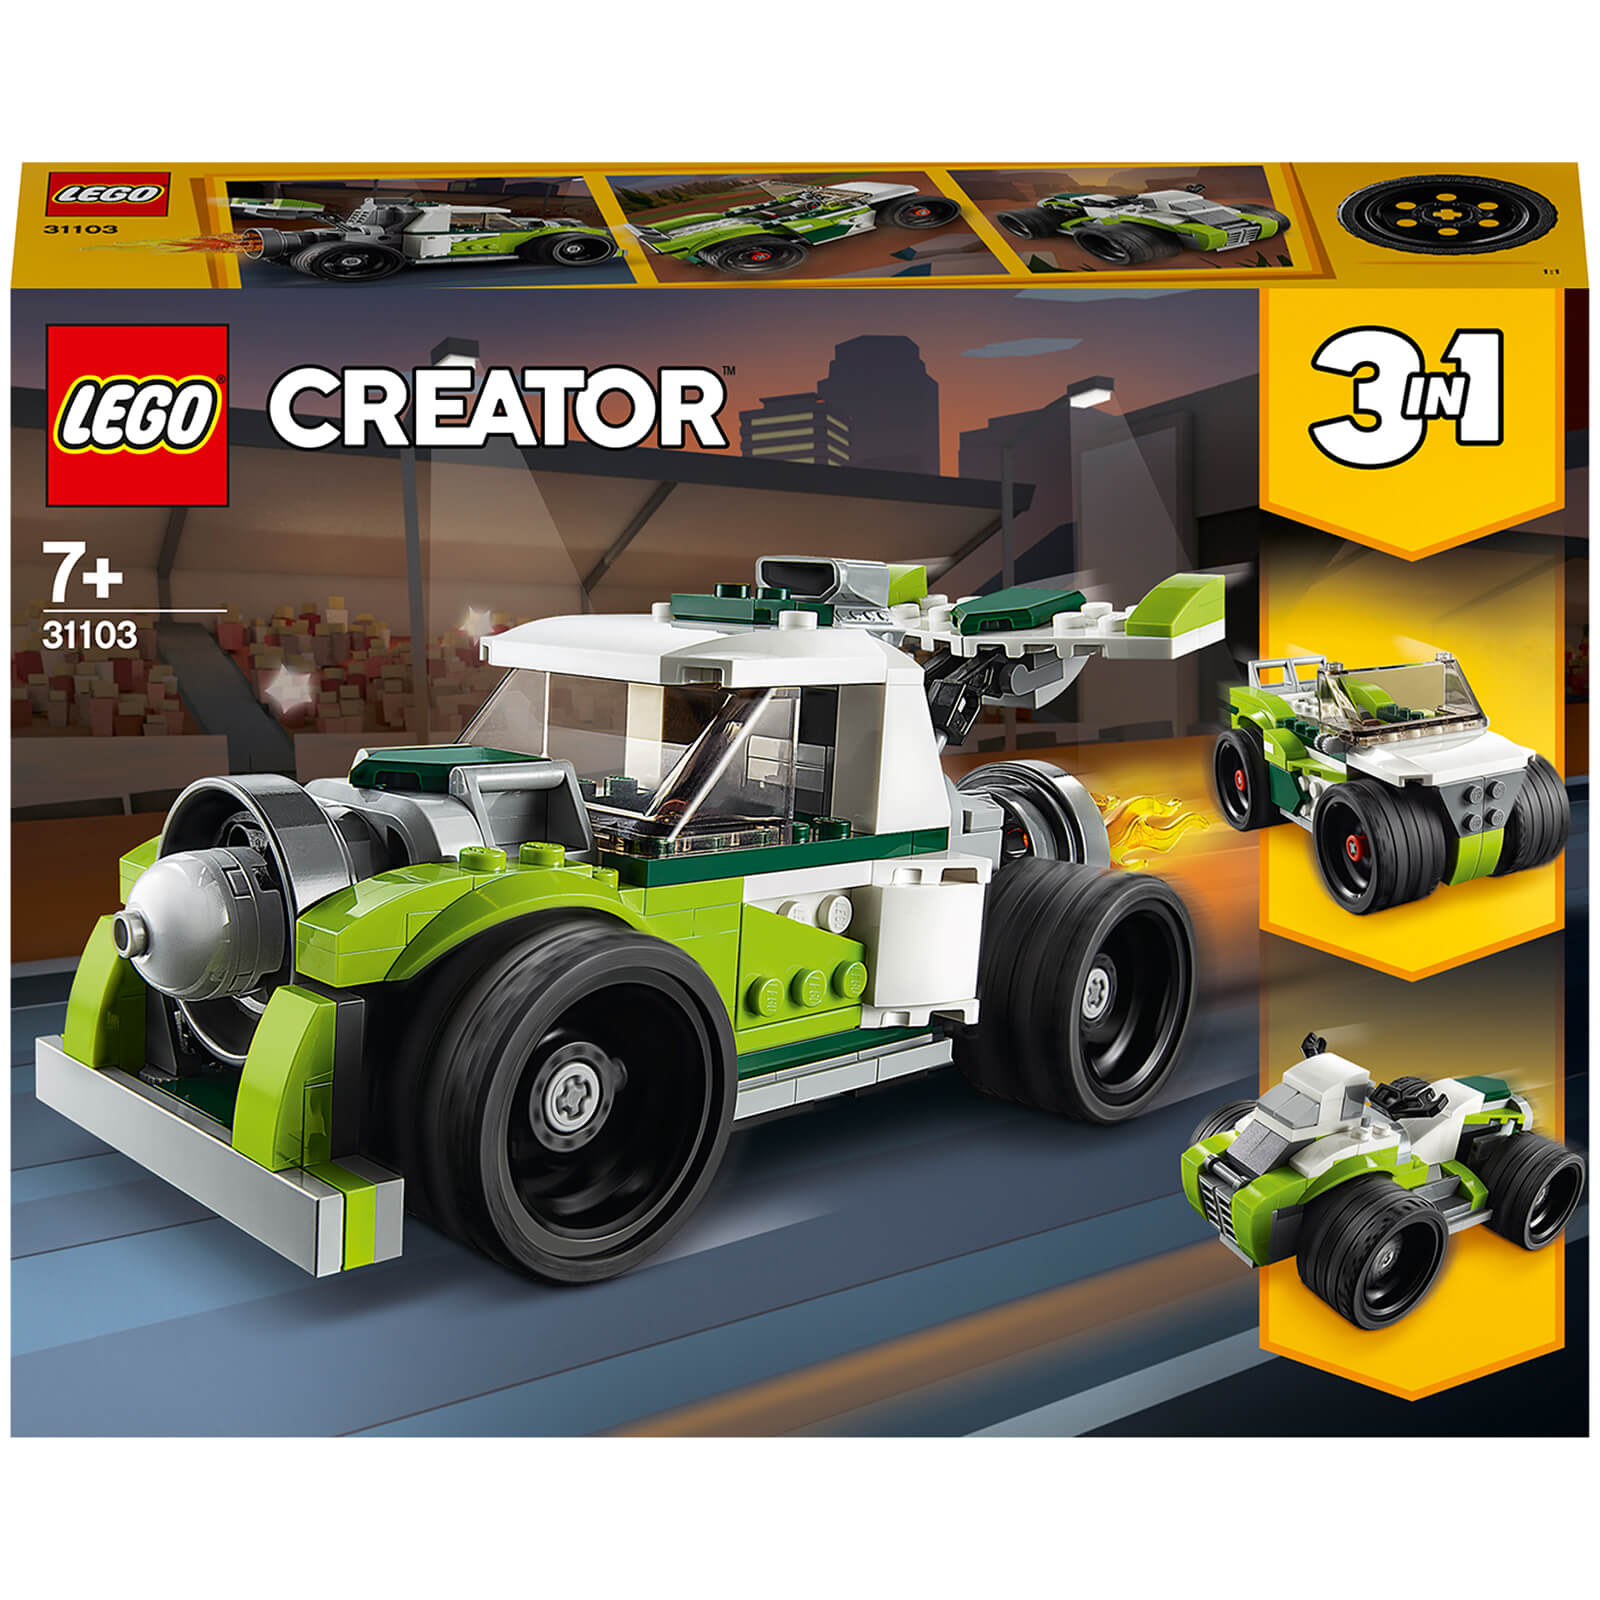 Lego Creator: 3in1 Rocket Truck Construction Set (31103)